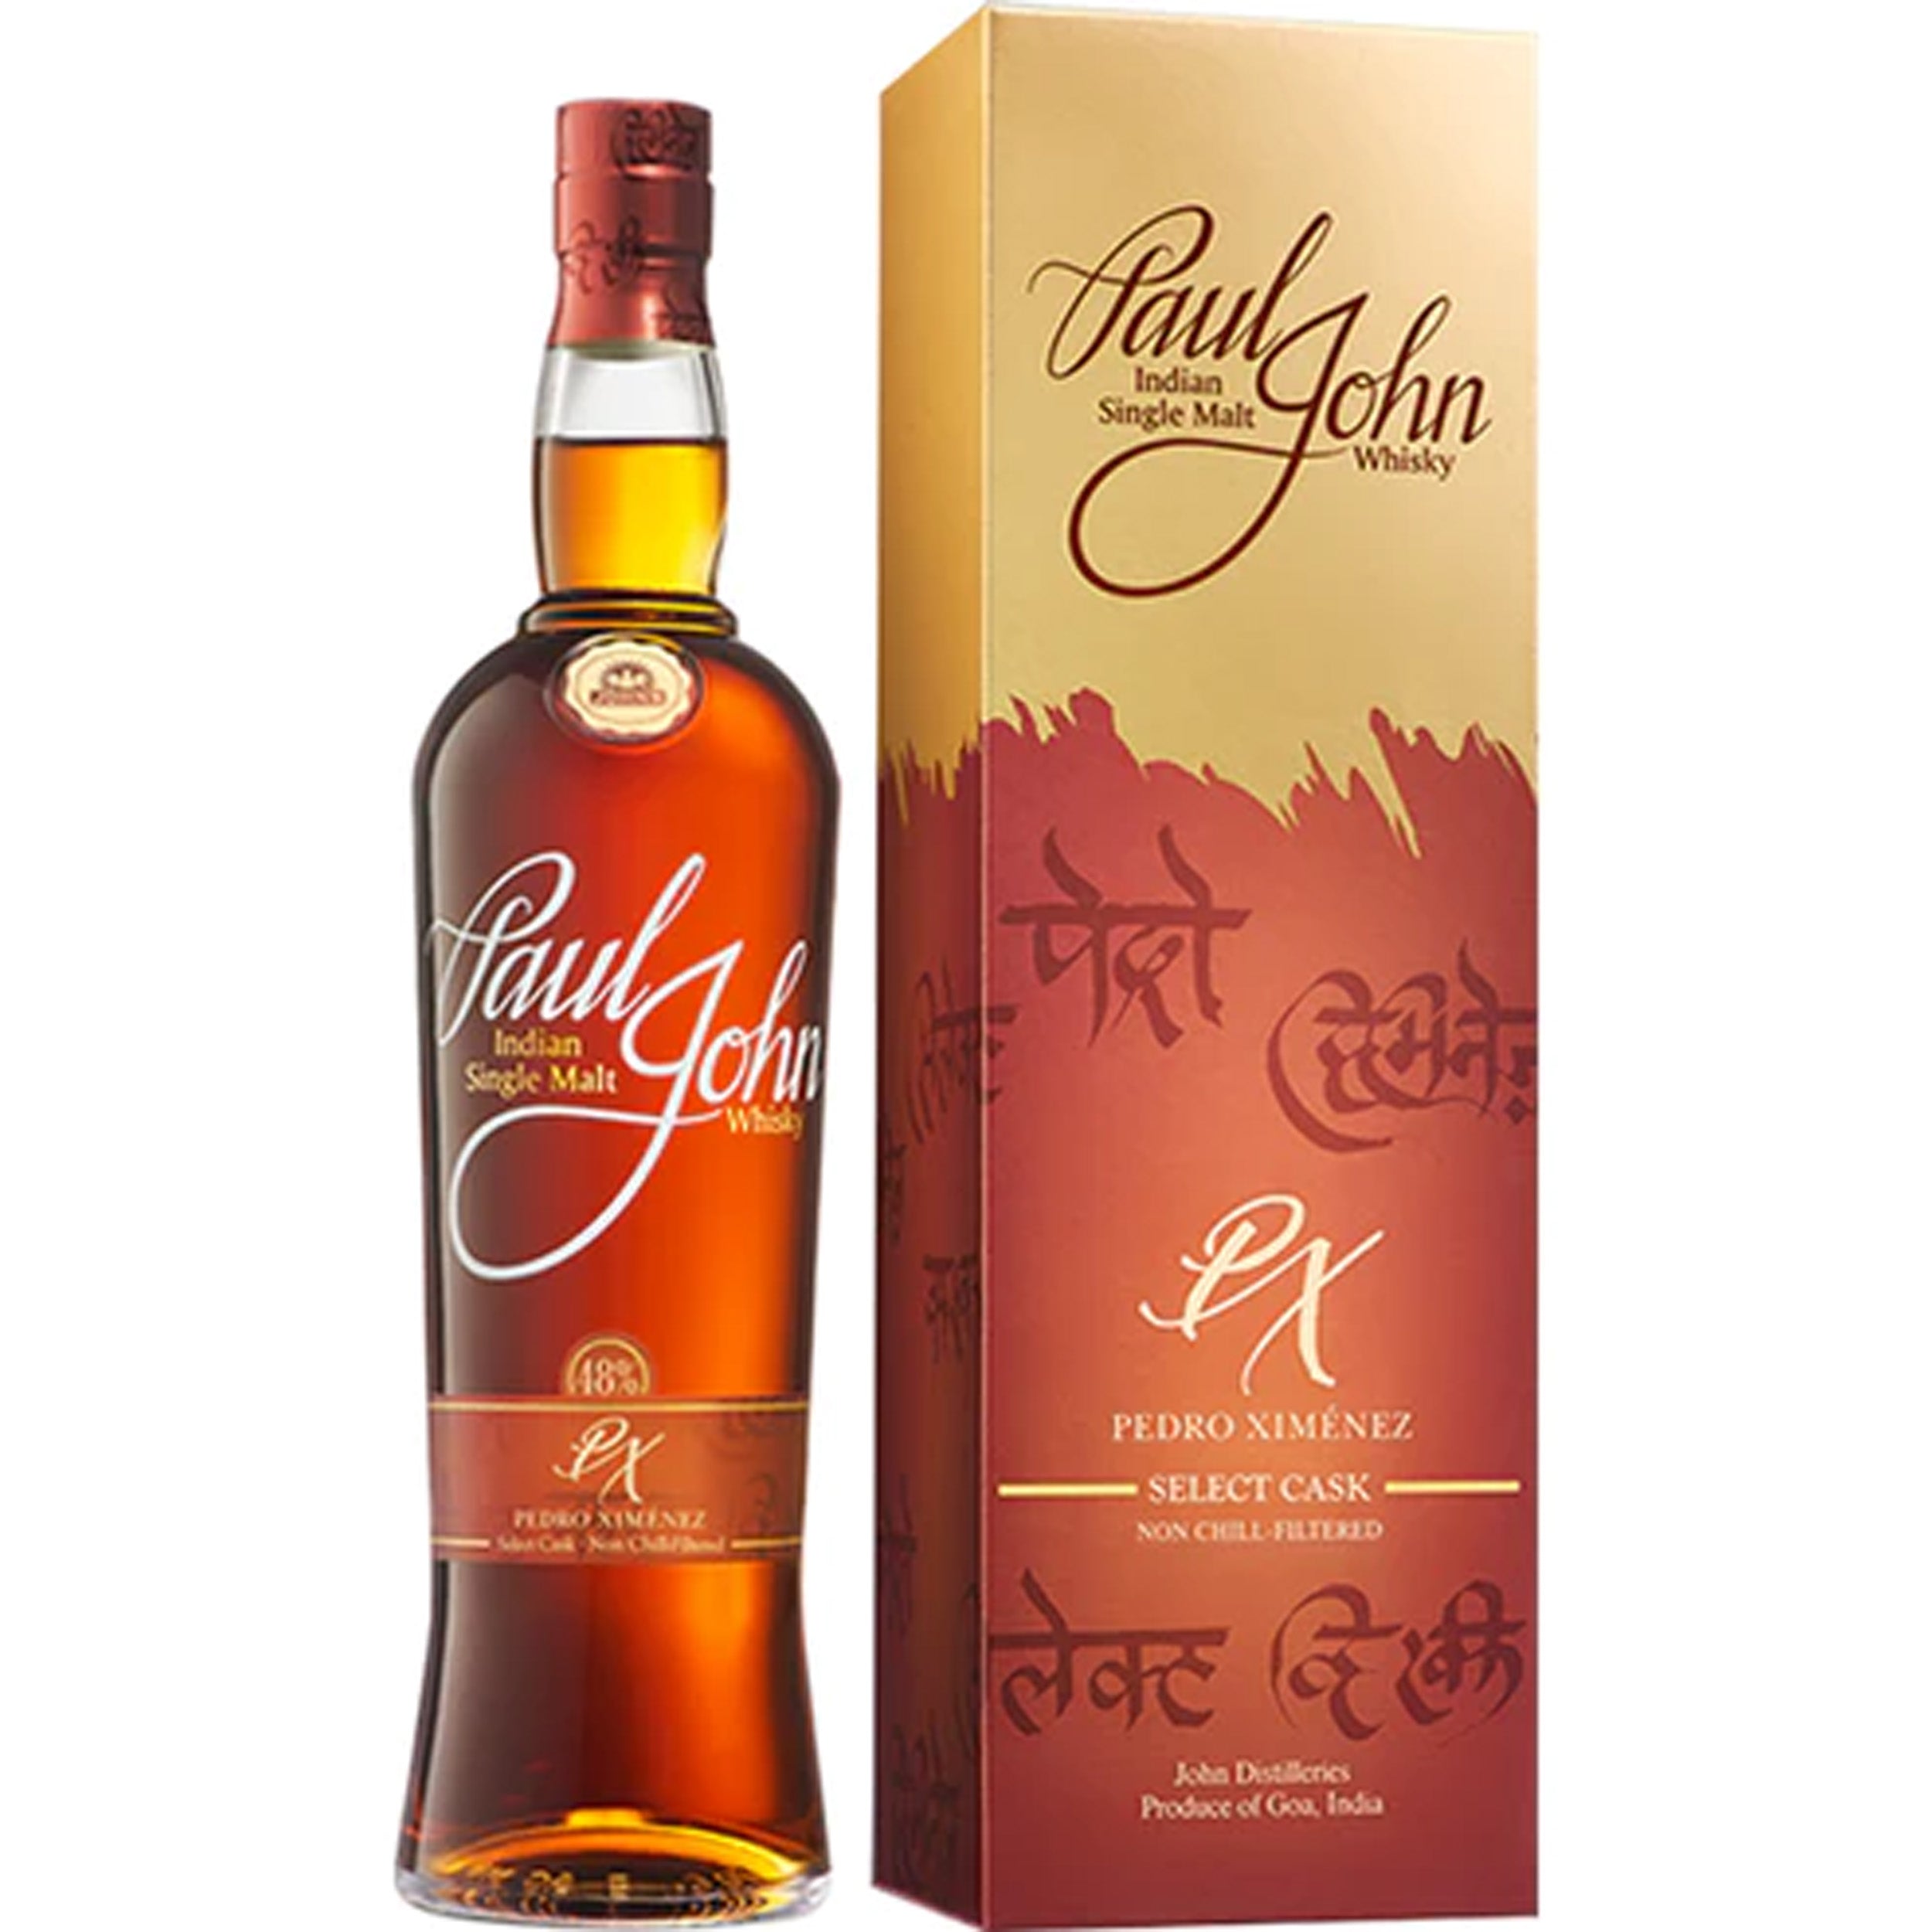 Paul John 'Pedro Ximenez Select Cask' Indian Single Malt Whisky